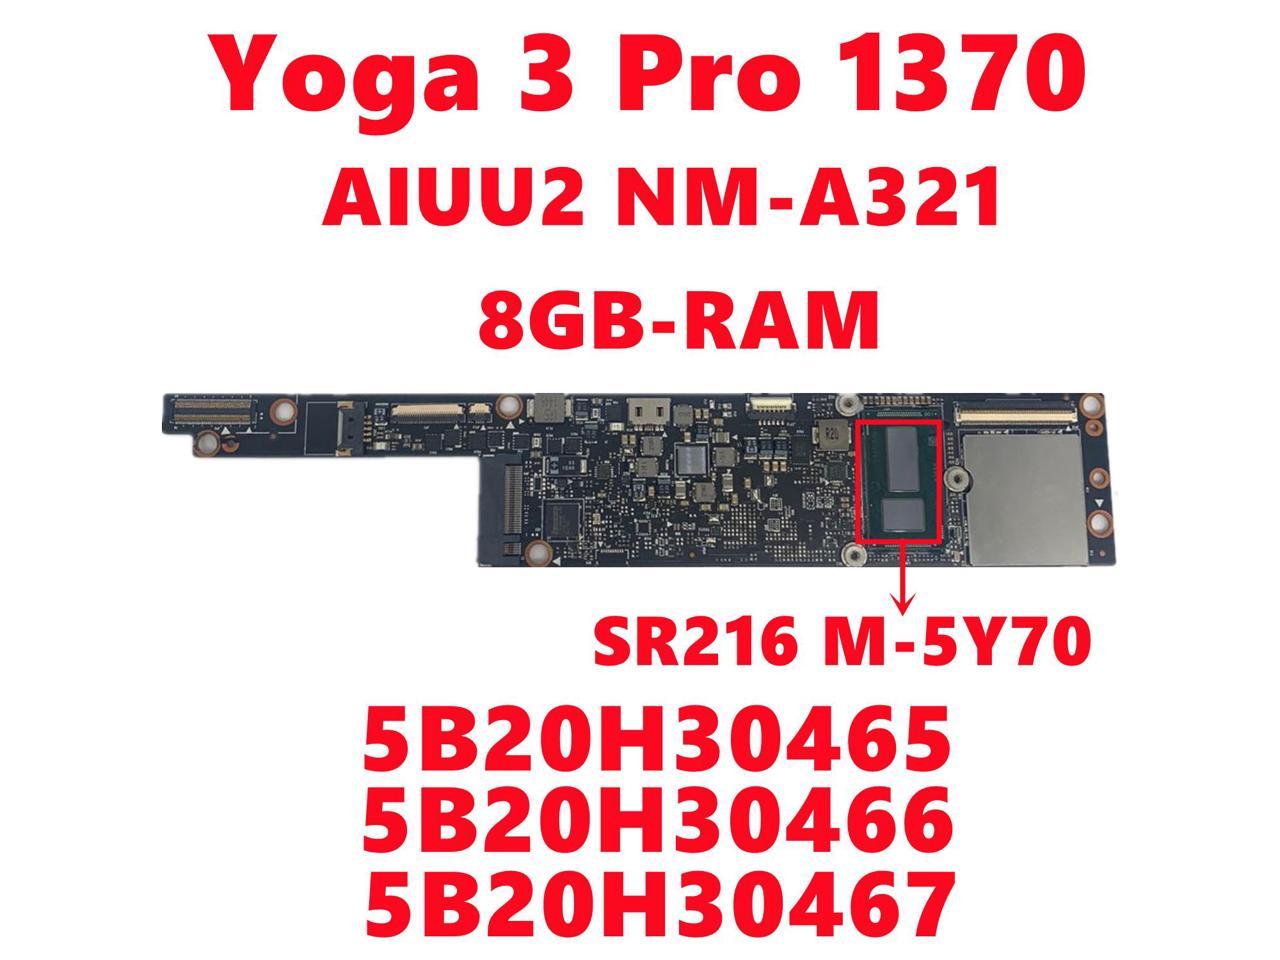 New Lenovo YOGA 3 Pro-1370 Intel M-5Y71 8GB AIUU2 NM-A321 Motherboard 